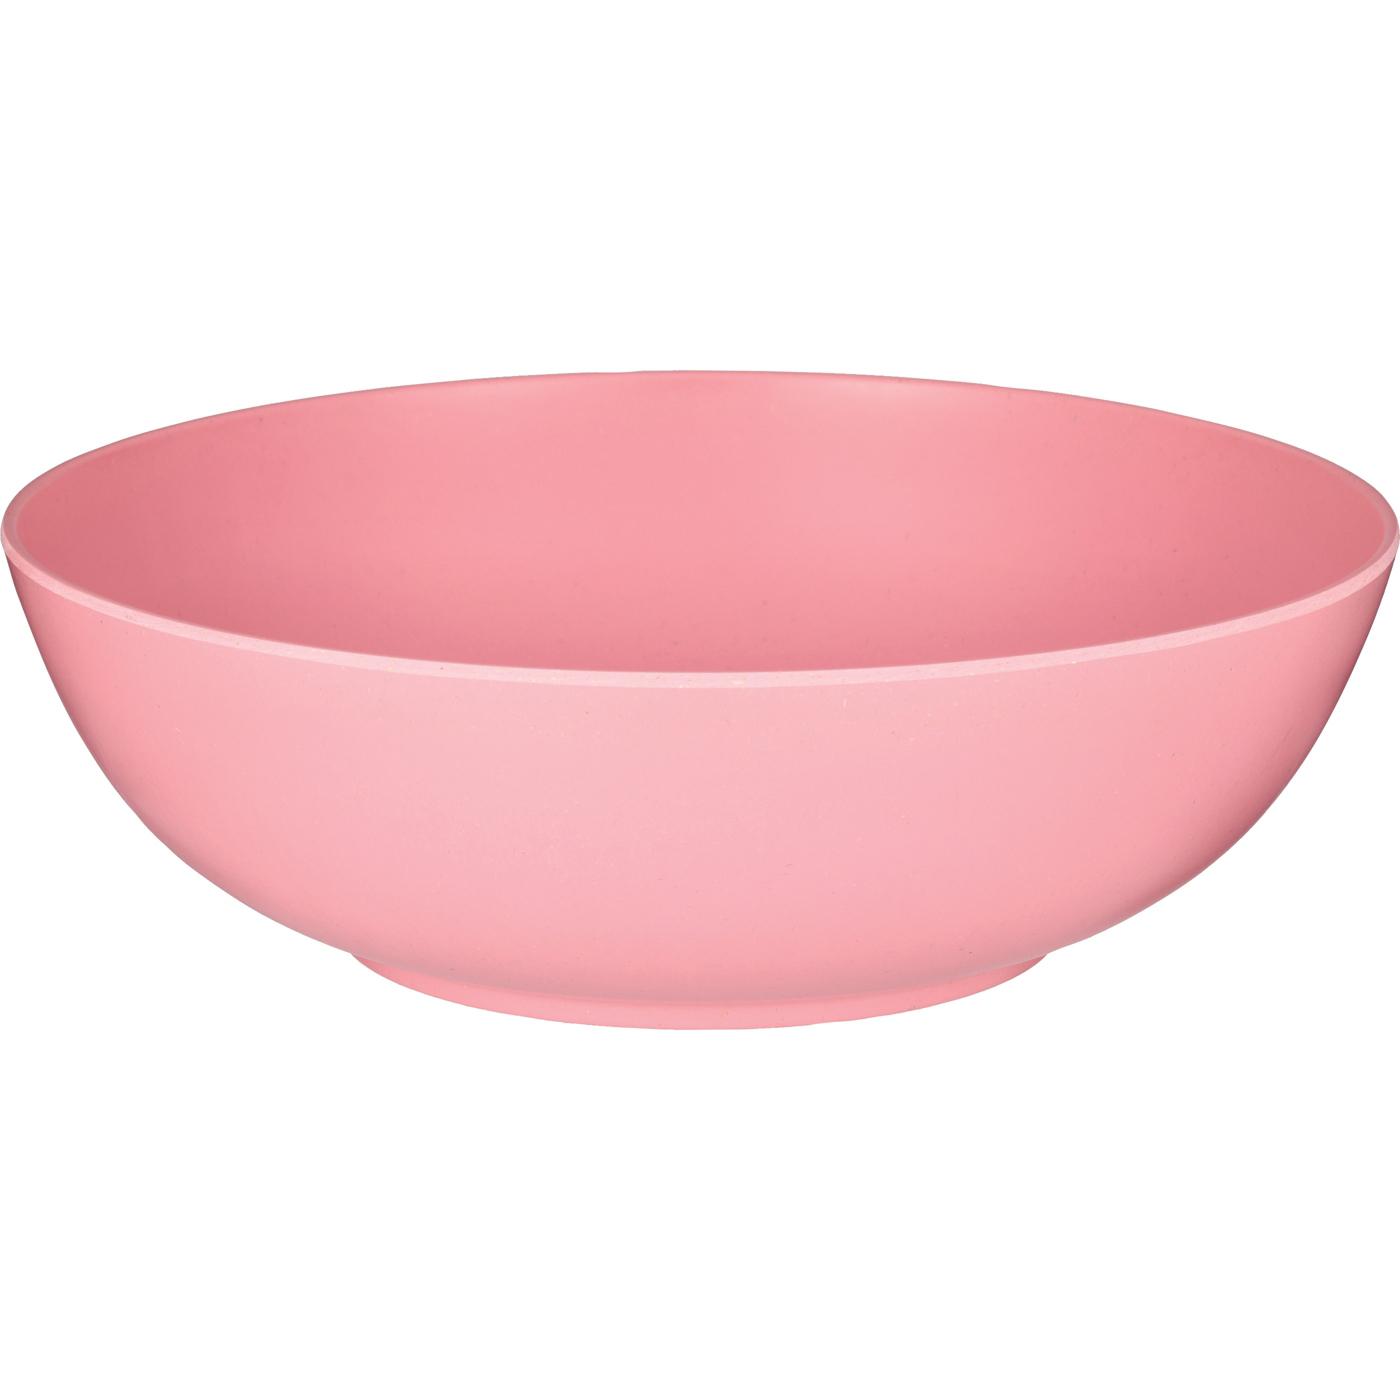 Destination Holiday Pink Serving Bowl; image 1 of 2